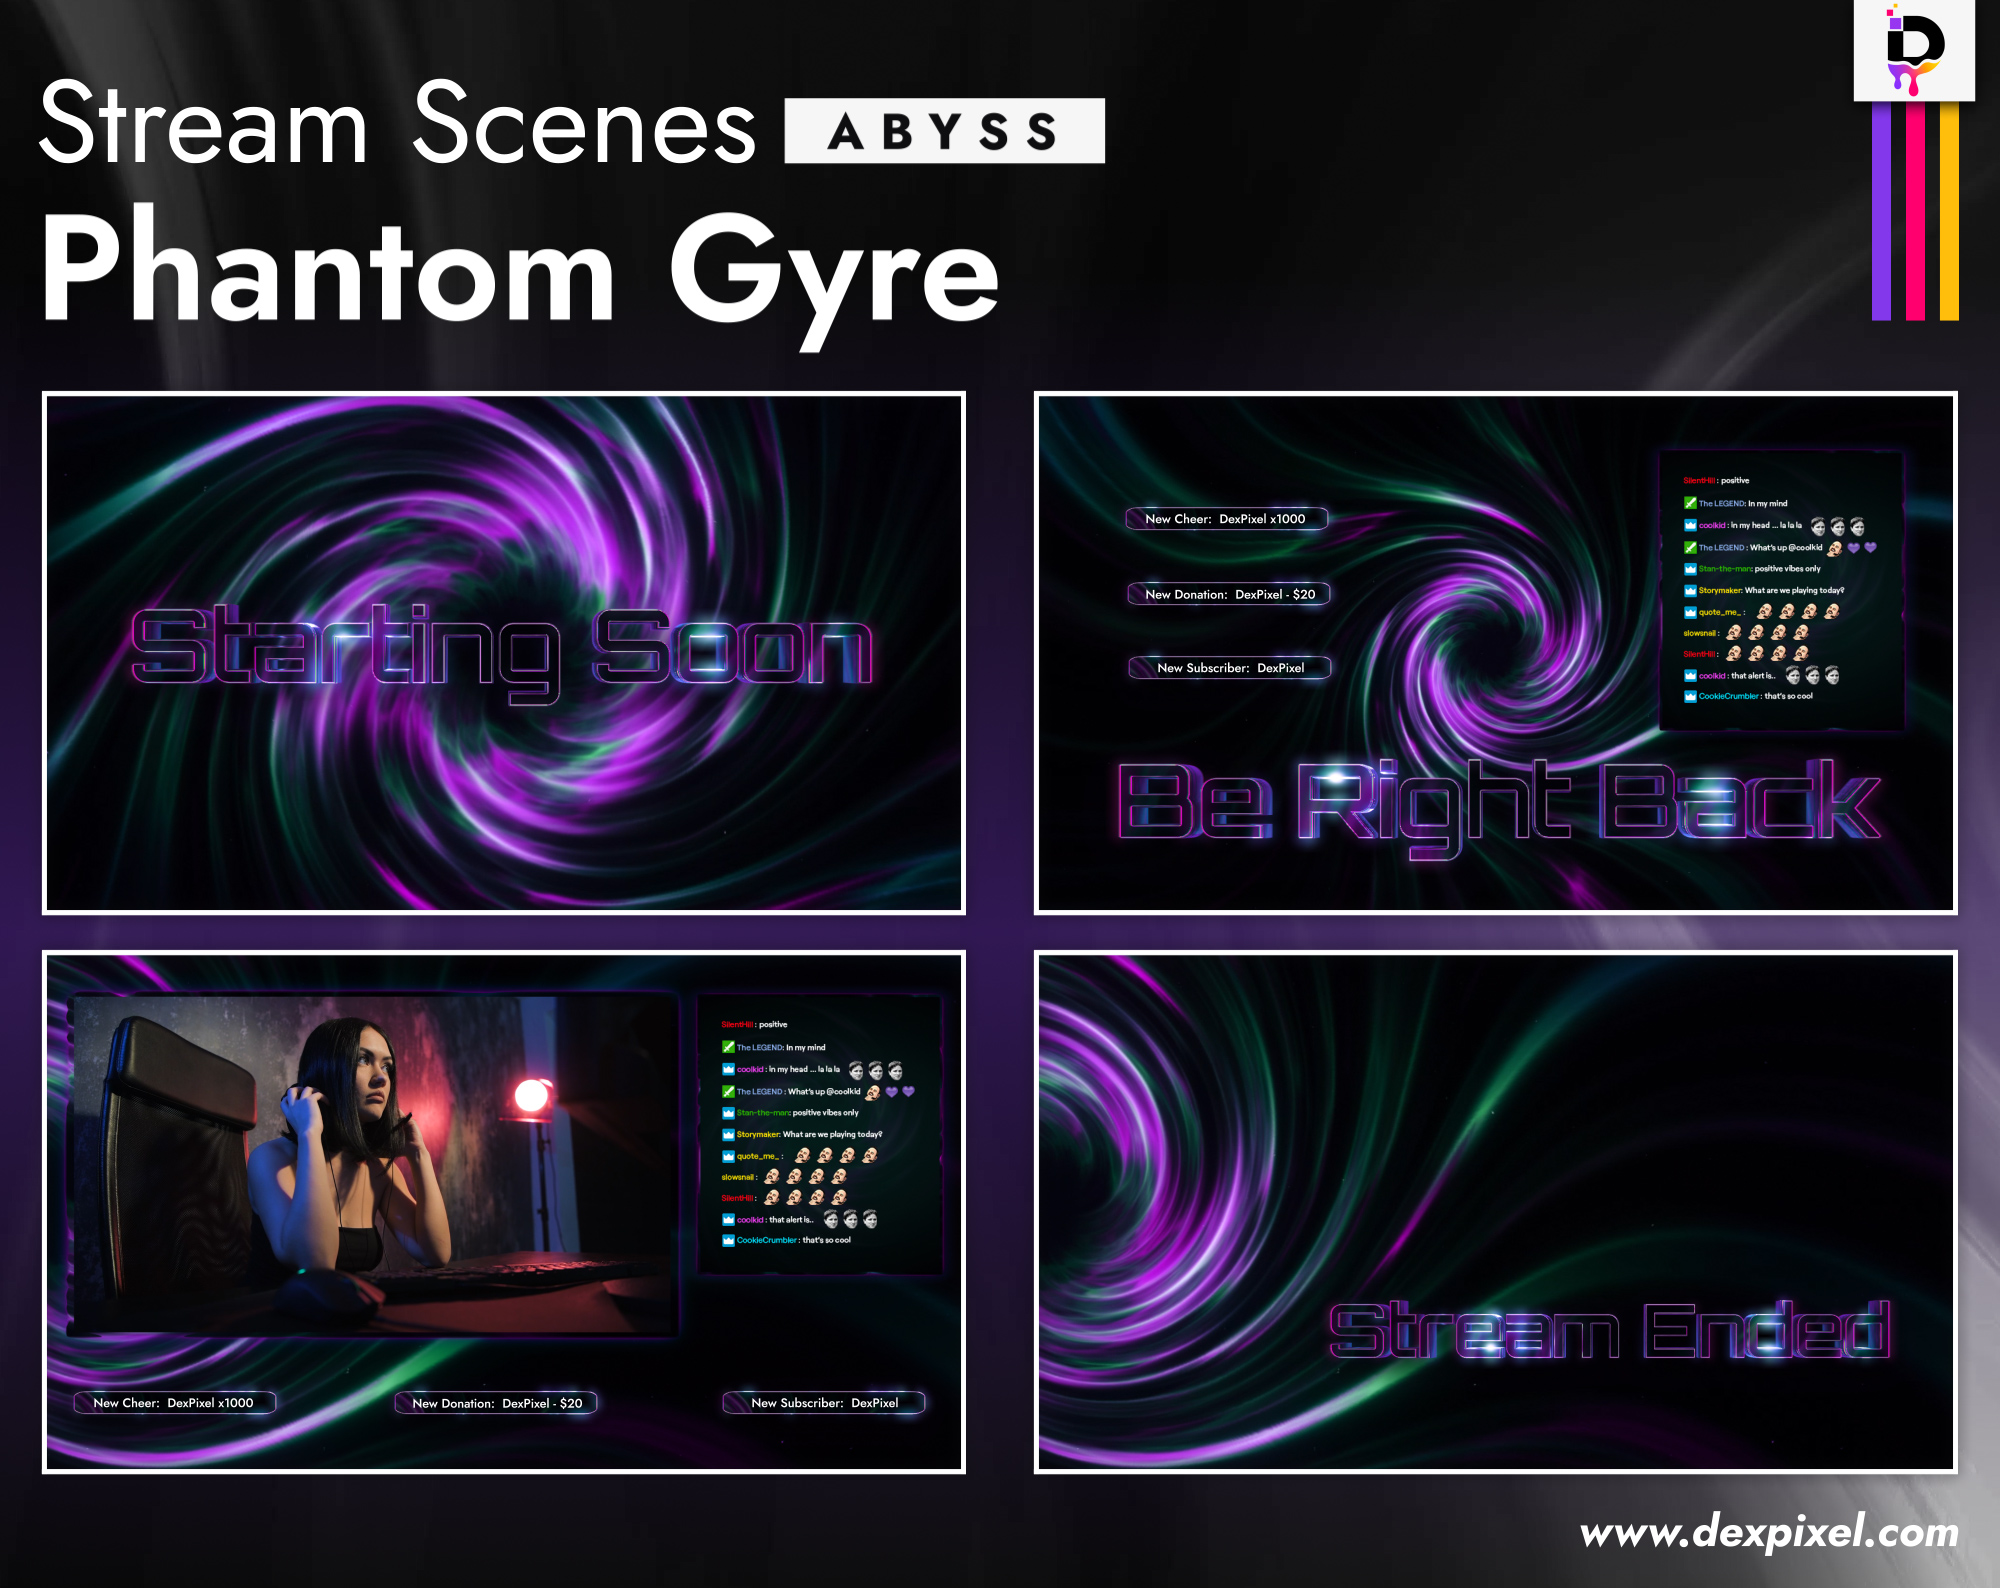 Stream Scenes Dexpixel Thumbnail Phantom Gyre Abyss